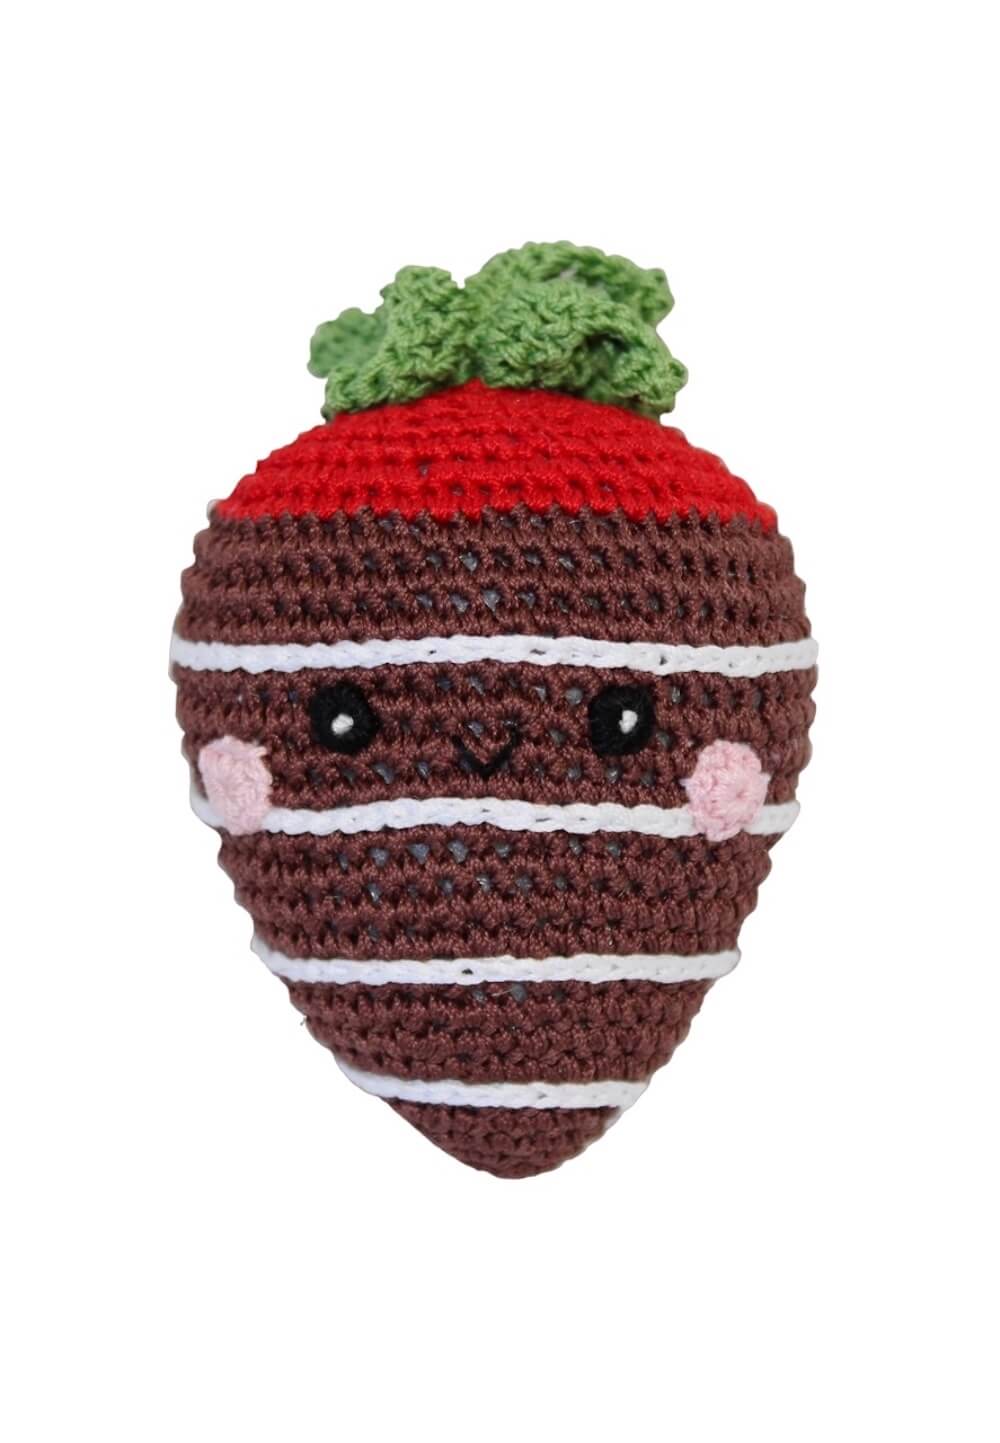 Knit Knacks "Milk Chocolate Strawberry" handmade organic cotton dog toy. Smiling anthropomorphic strawberry dipped in milk chocolate.